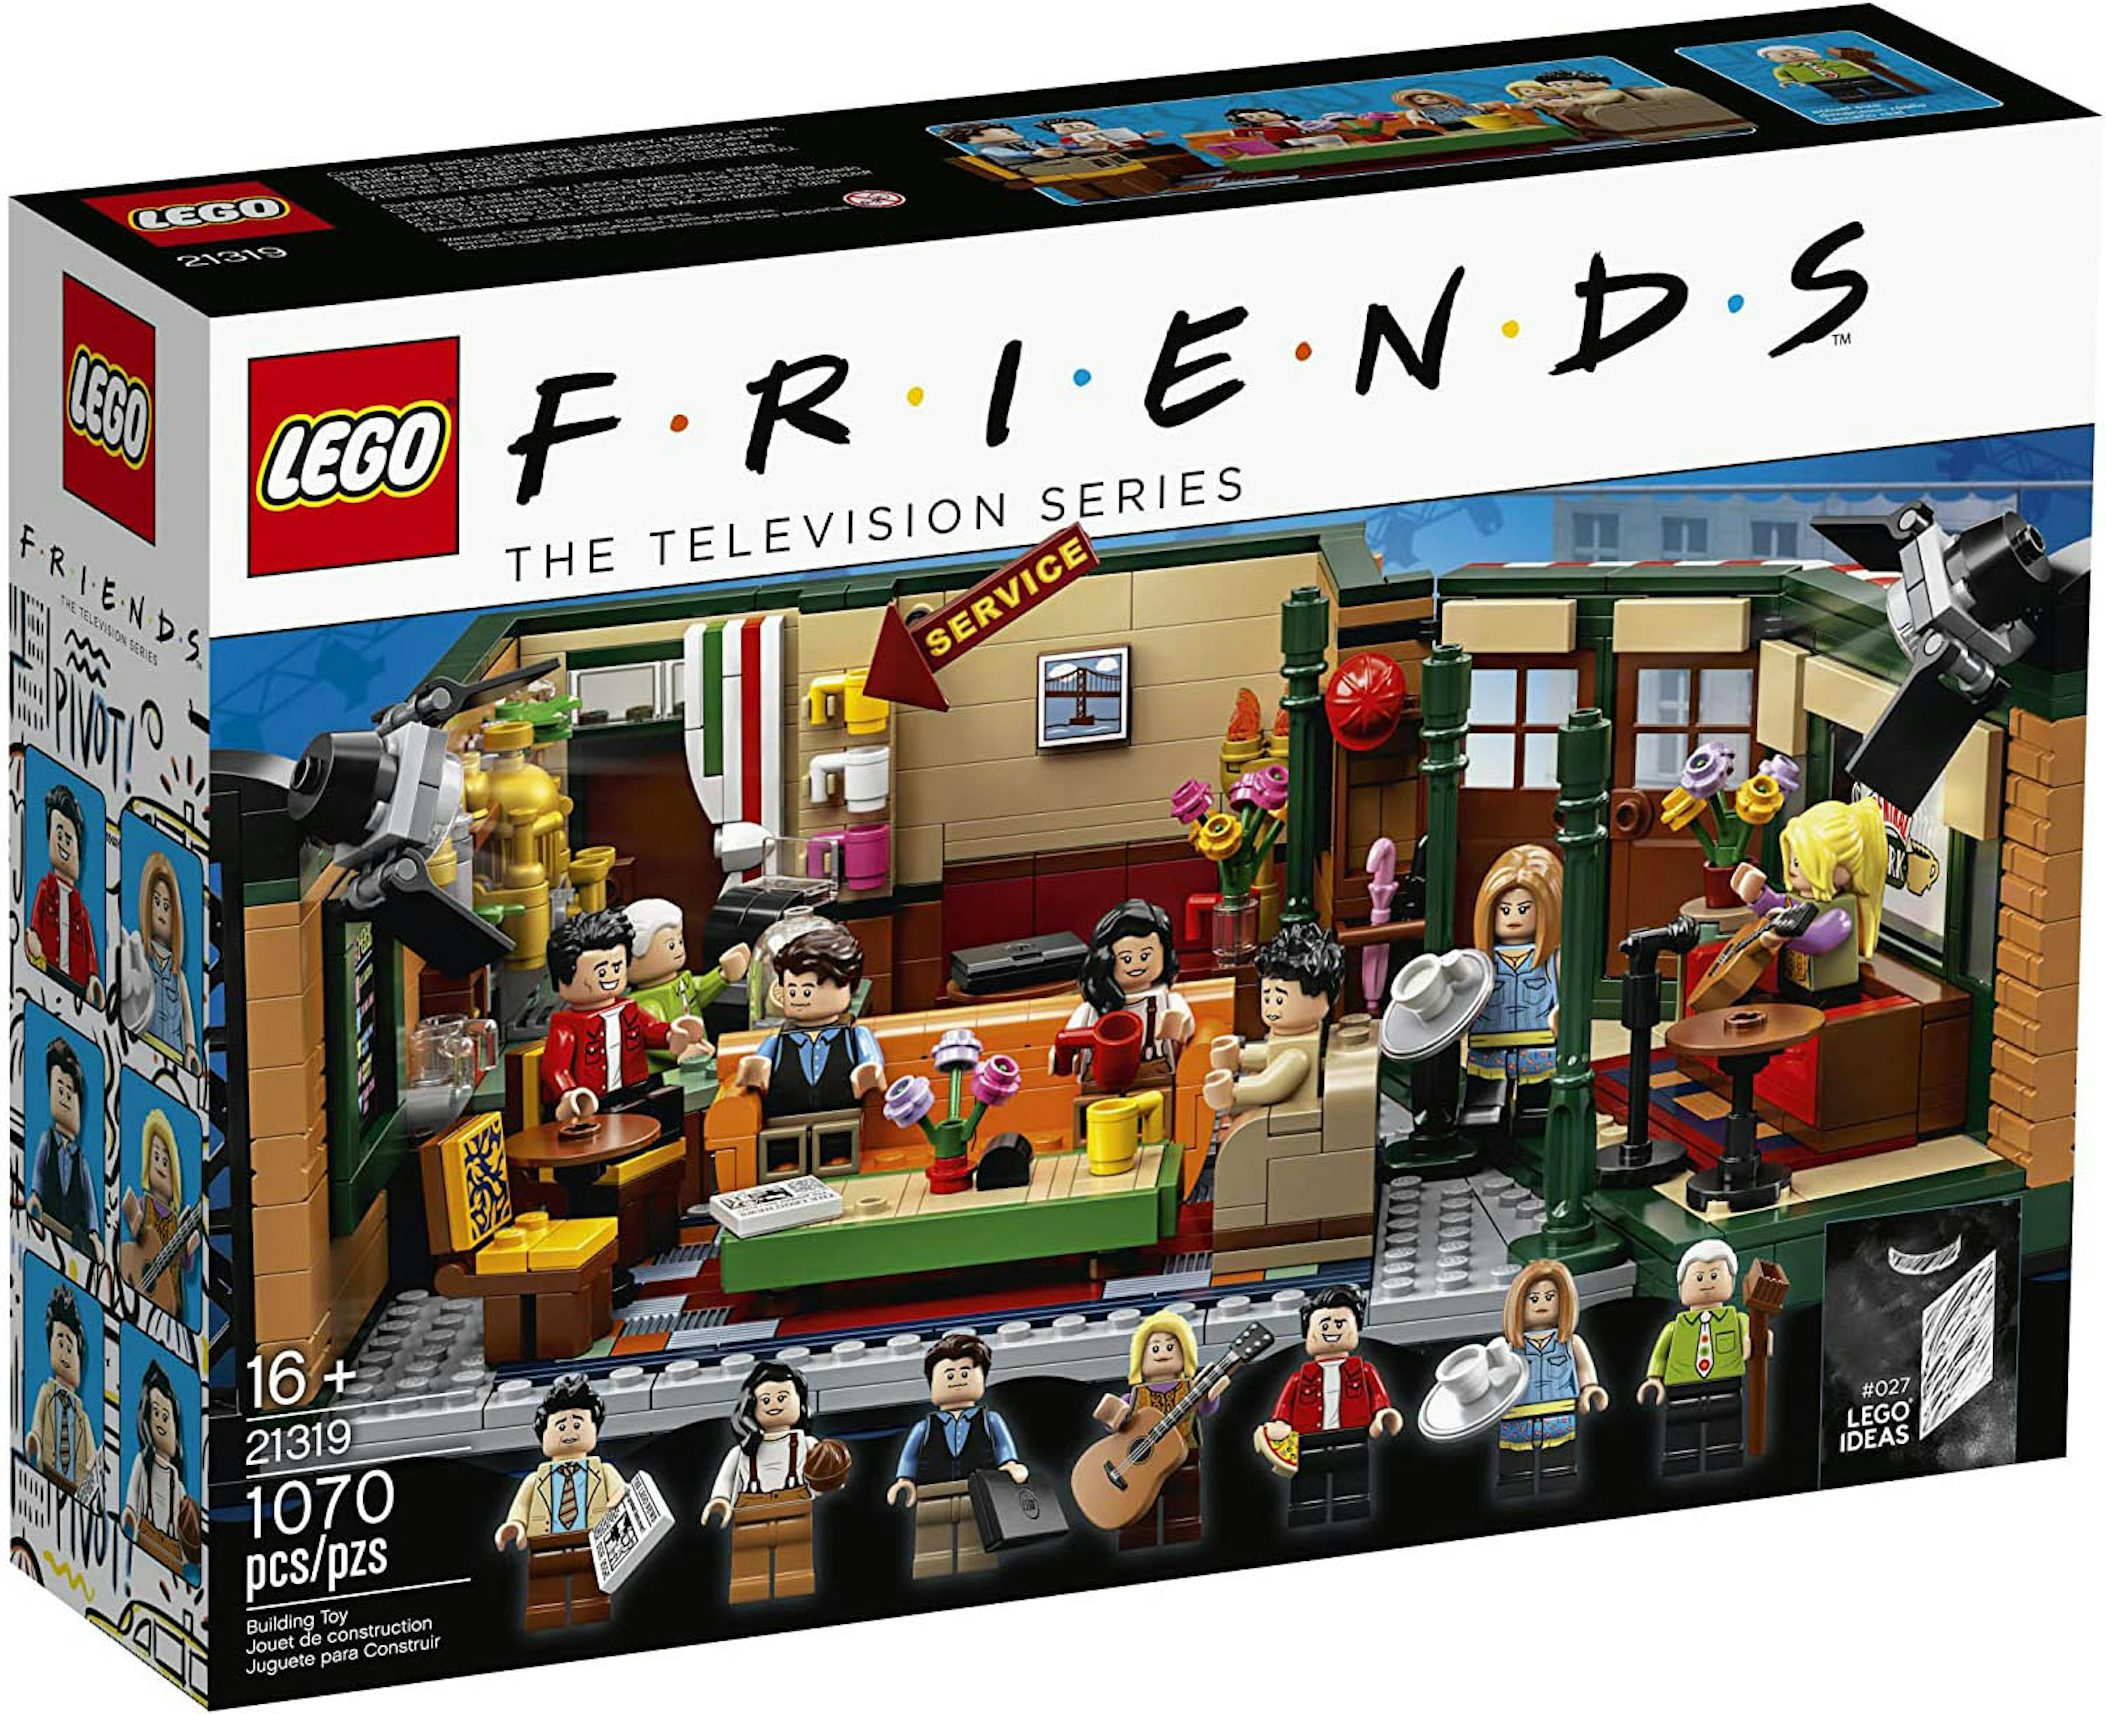 https://images.stockx.com/images/Lego-FRIENDS-Central-Perk-Set-21319.jpg?fit=fill&bg=FFFFFF&w=1200&h=857&fm=jpg&auto=compress&dpr=2&trim=color&updated_at=1611070372&q=60